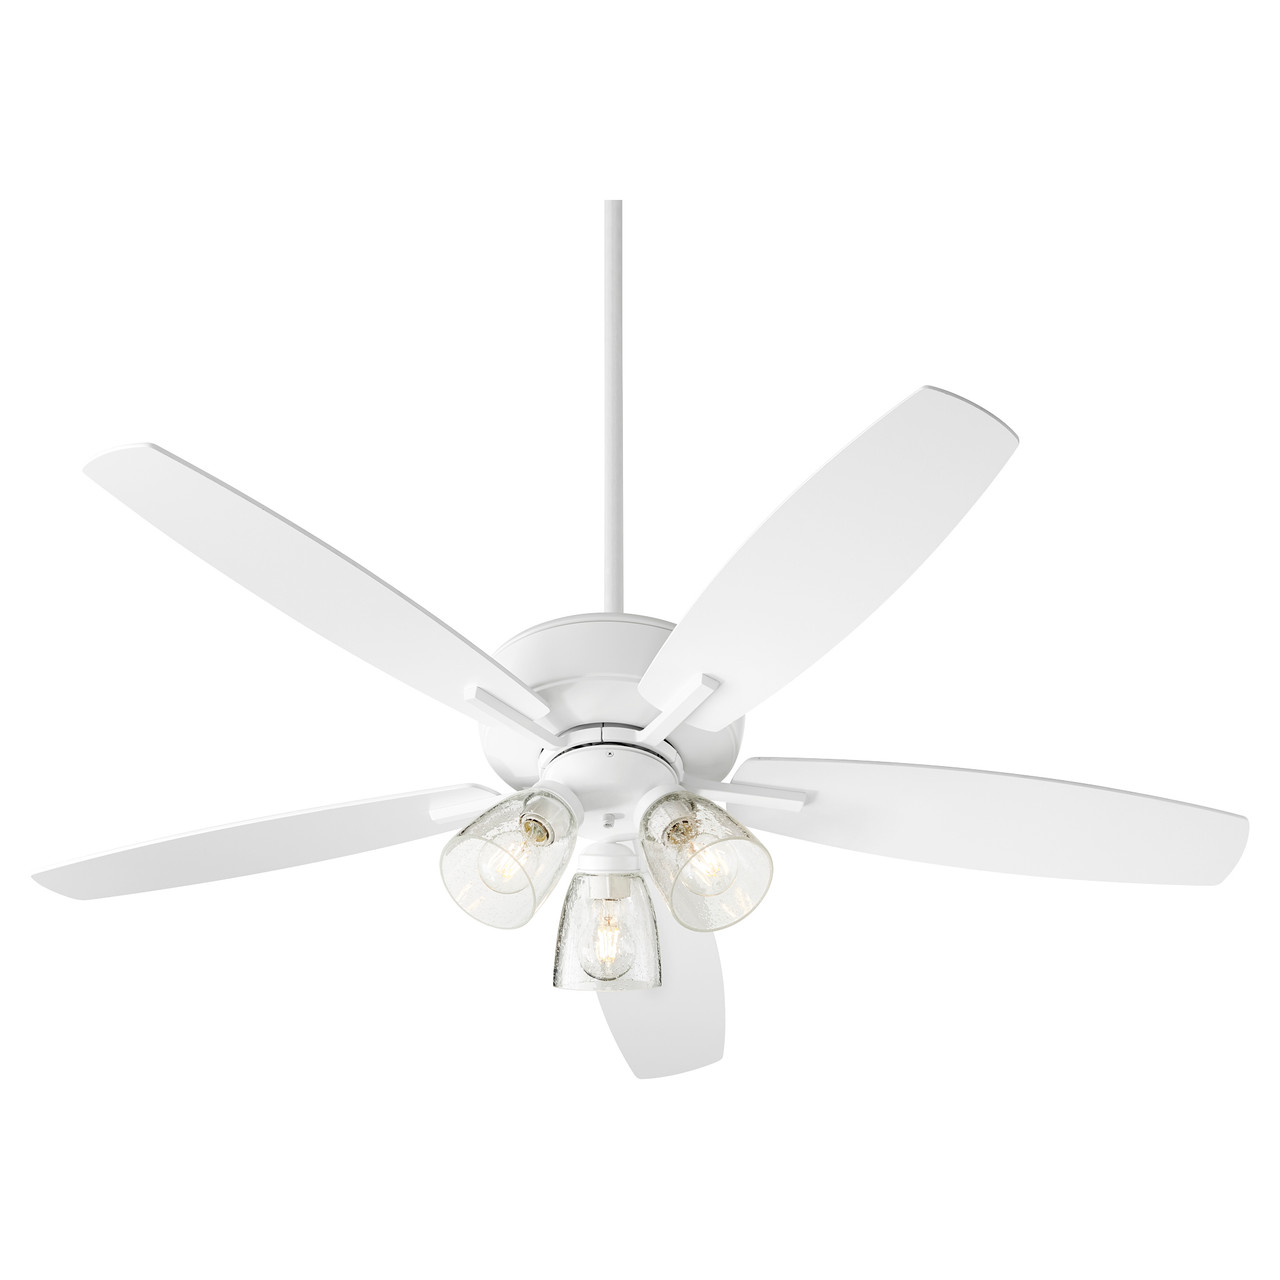 QUORUM INTERNATIONAL 7052-308 Breeze 3-Light Ceiling Fan, Studio White